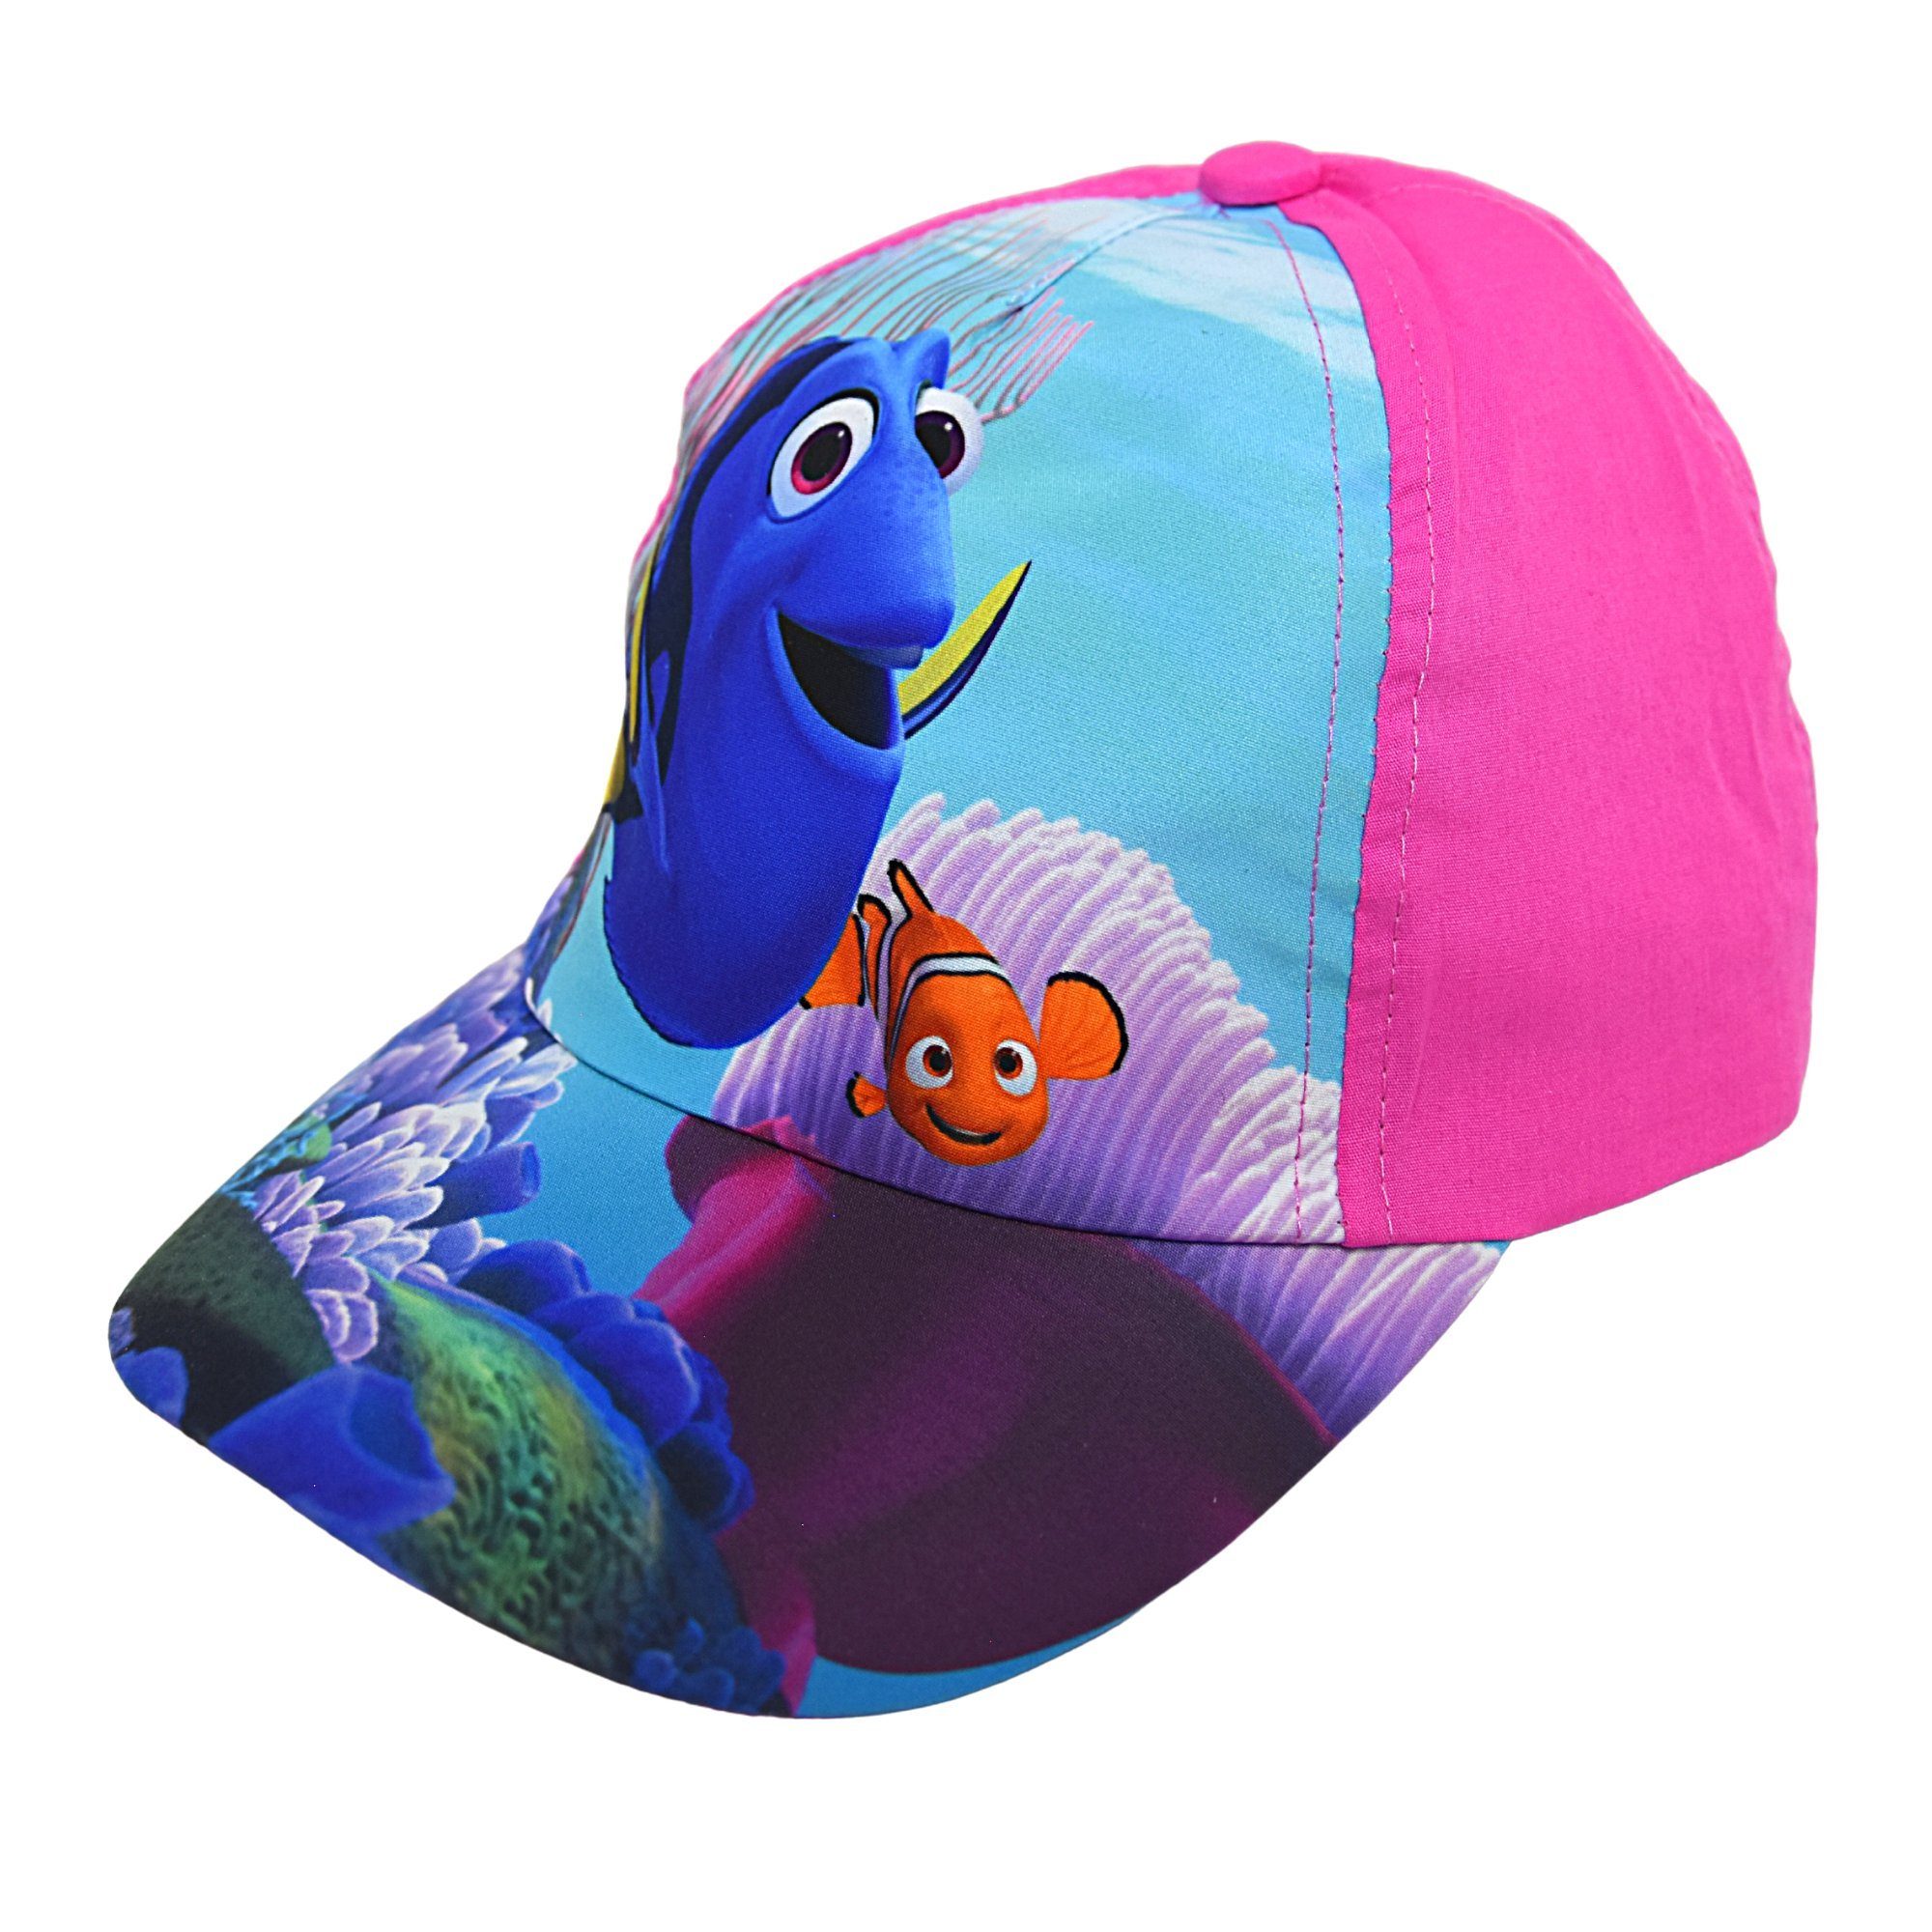 Schutz cm UV Pink Sommerkappe 52-54 mit Nemo Cap Disney Dory & Baseball 30+ Größe